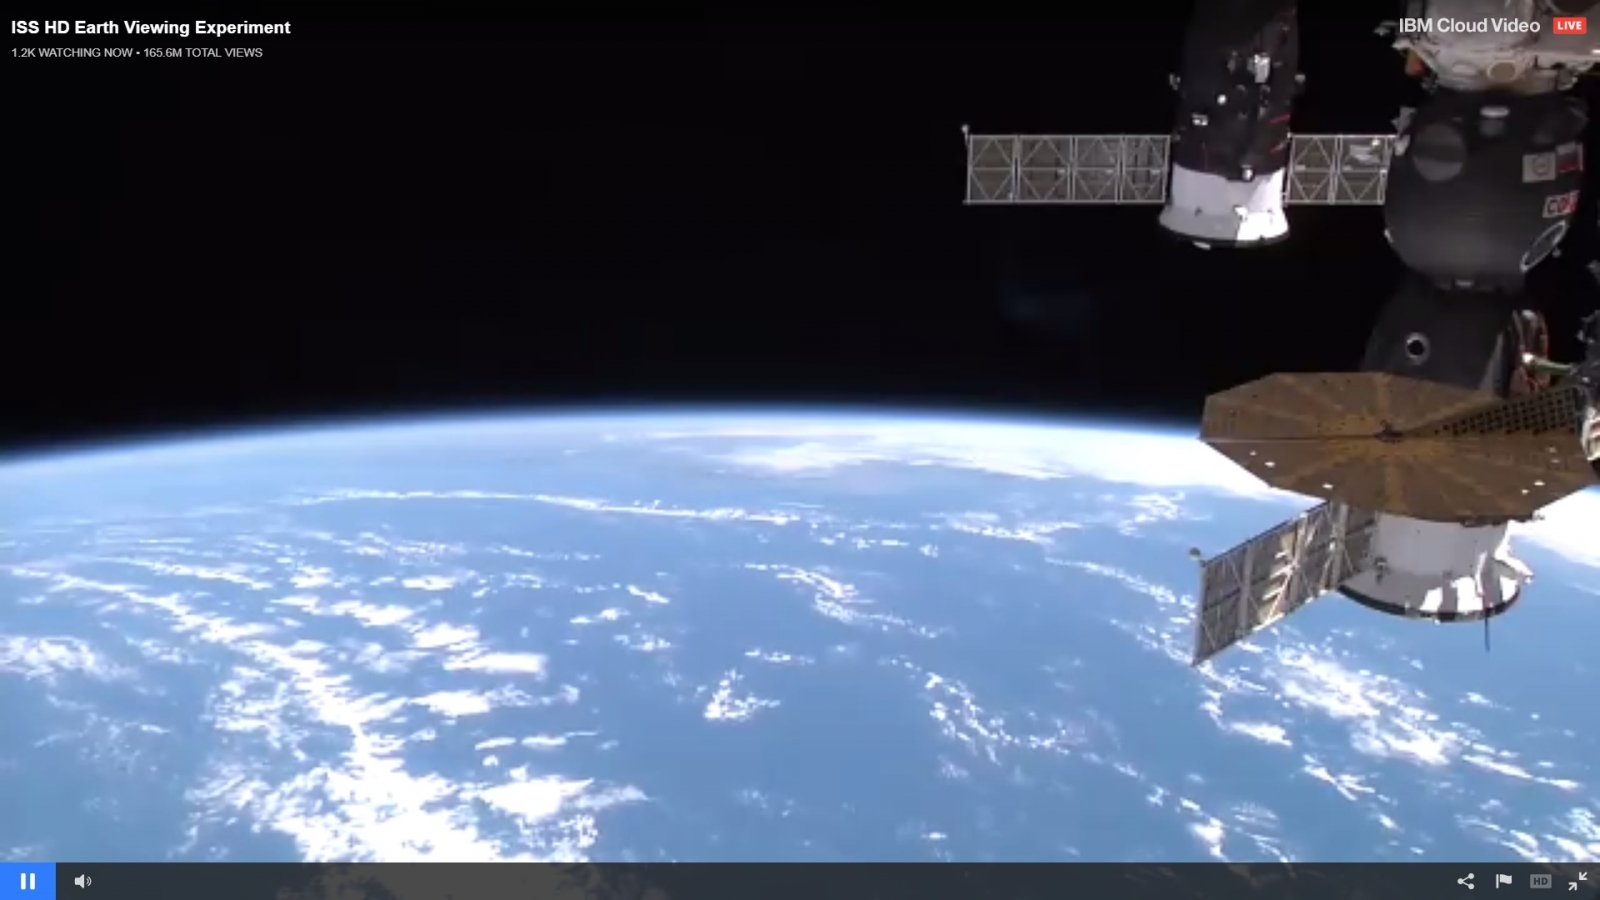 international space station live cam